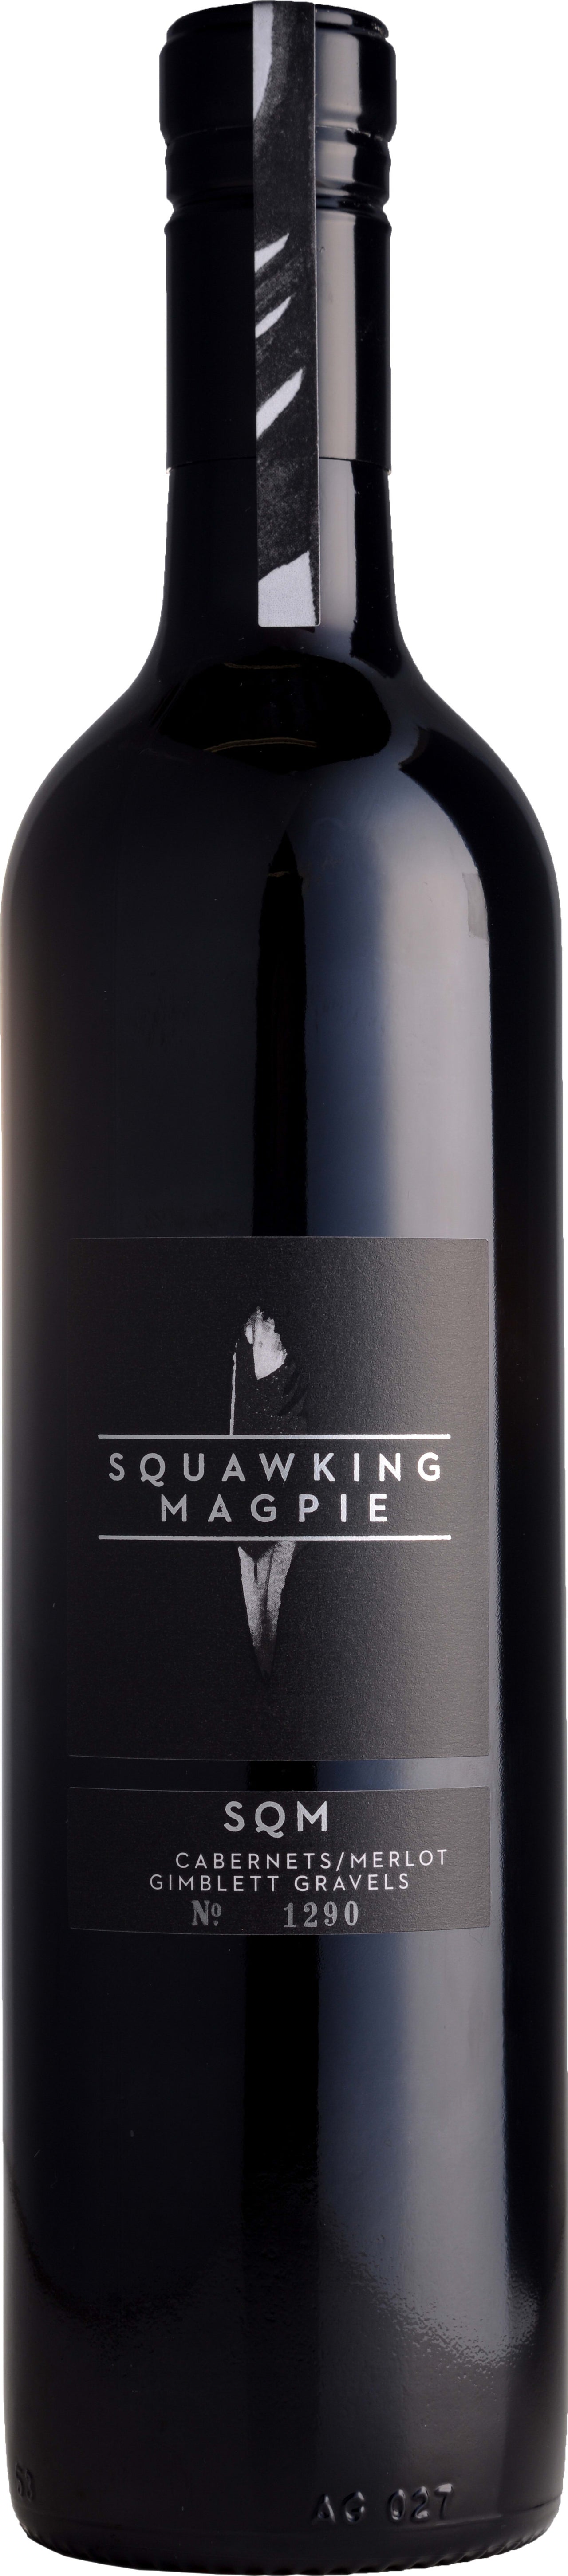 Squawking Magpie SQM Cabernet Sauvignon, Merlot, Cabernet Franc 2014 75cl - Buy Squawking Magpie Wines from GREAT WINES DIRECT wine shop